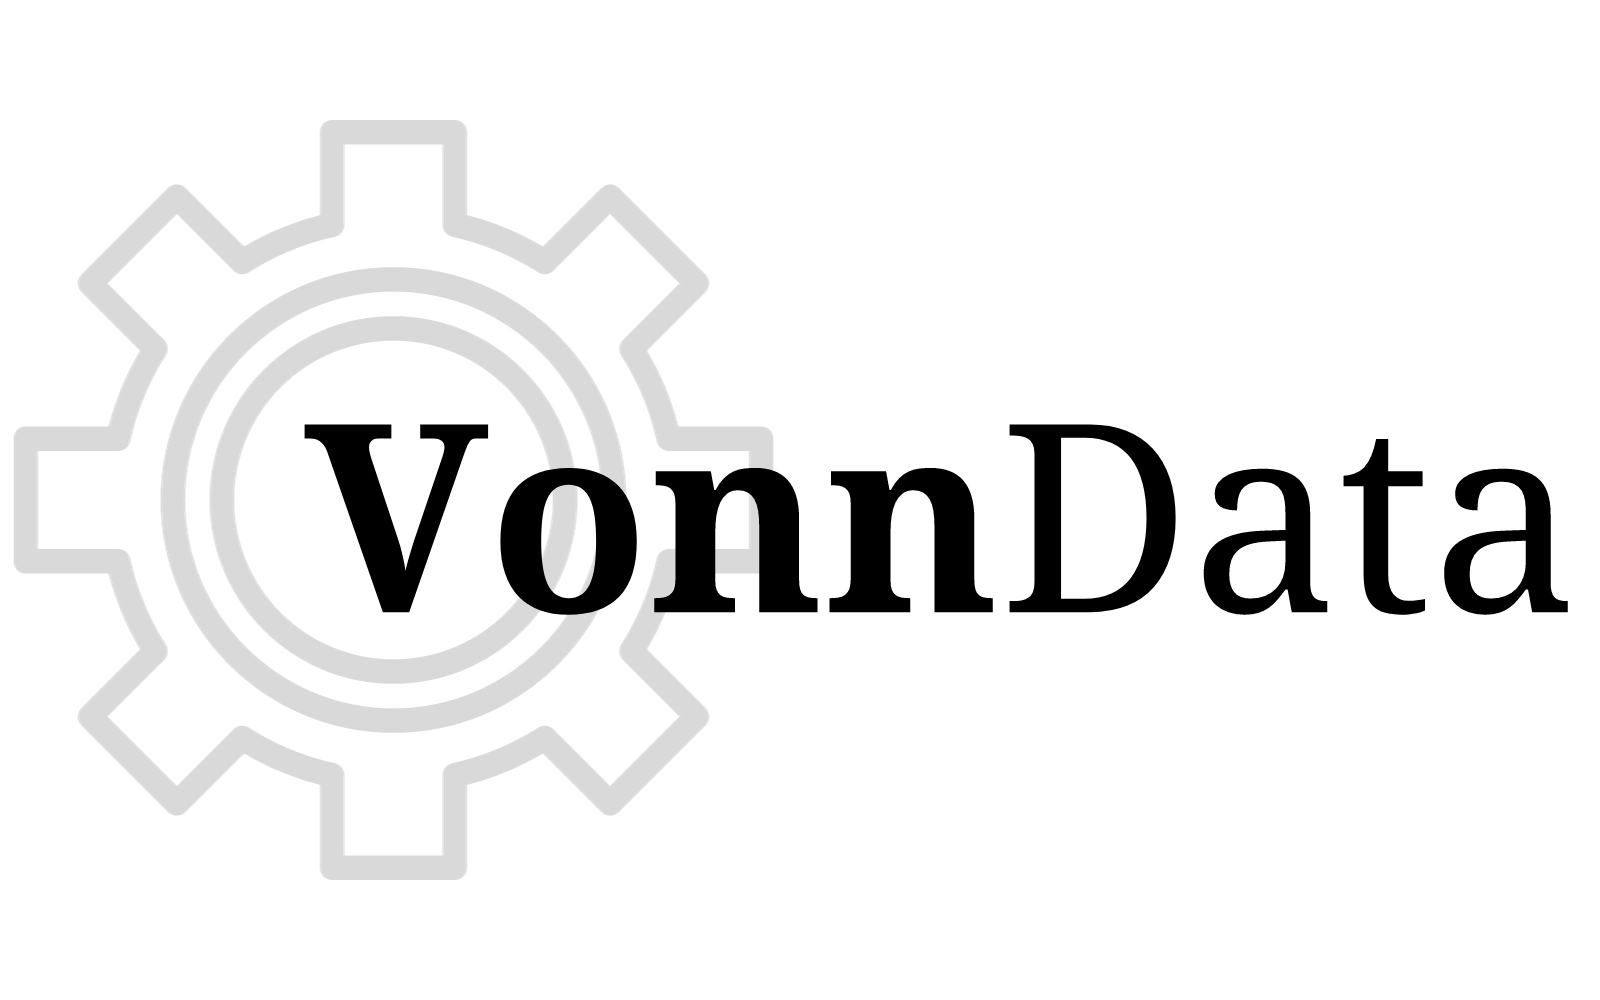 VonnData.com logo